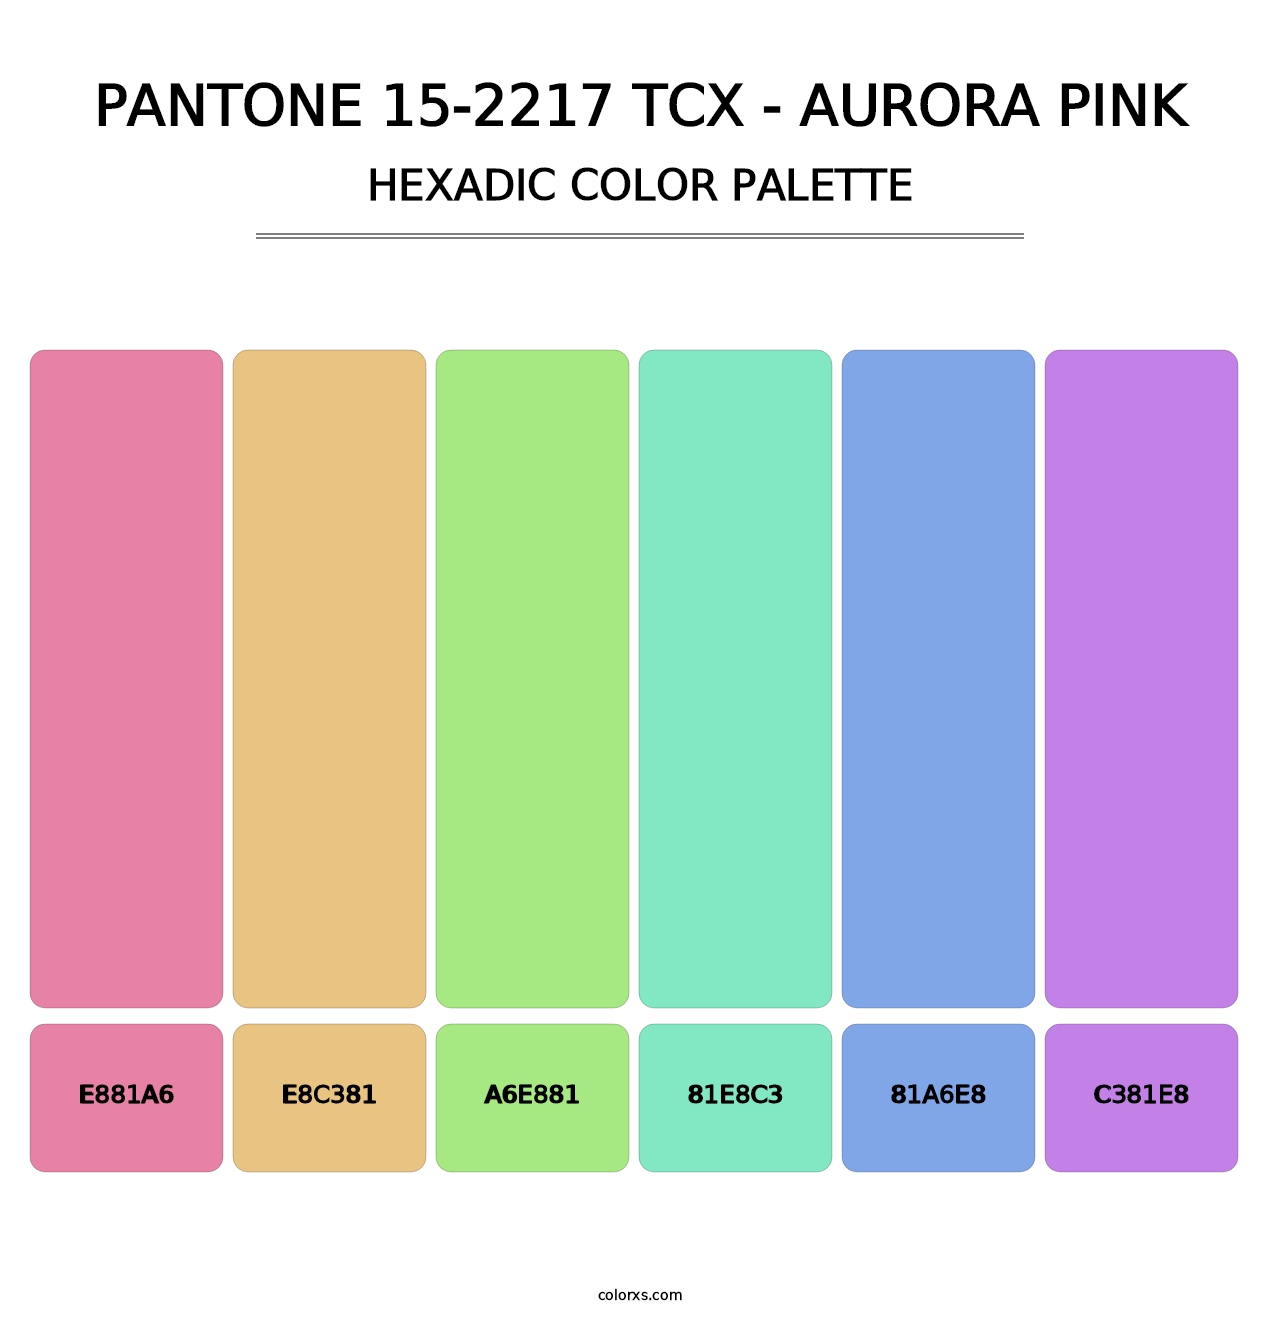 PANTONE 15-2217 TCX - Aurora Pink - Hexadic Color Palette